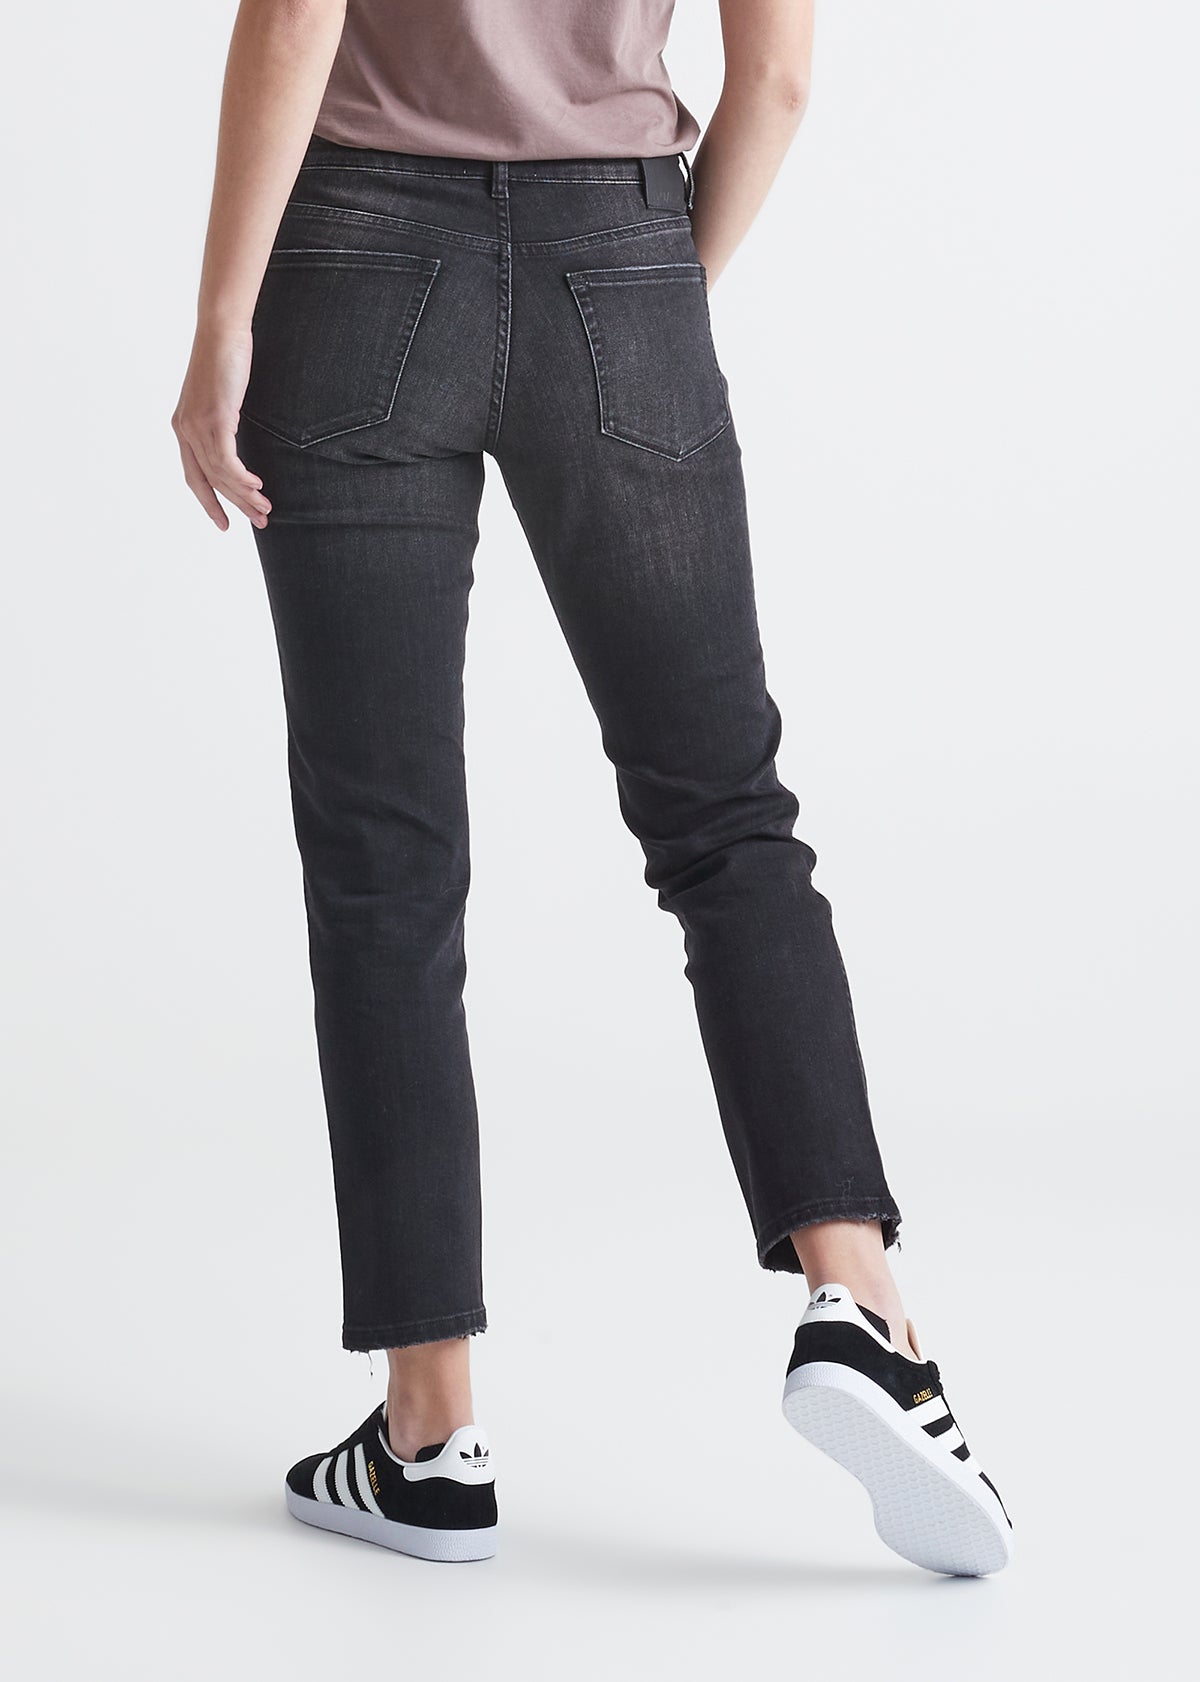 Women's Denim Jeans Fashion High Waist Striaght Leg Long Pants Boyfriend  Casual Comfy Jeans Regular Fit Blue / Black / Light Blue Pants(XS,Light Blue)  